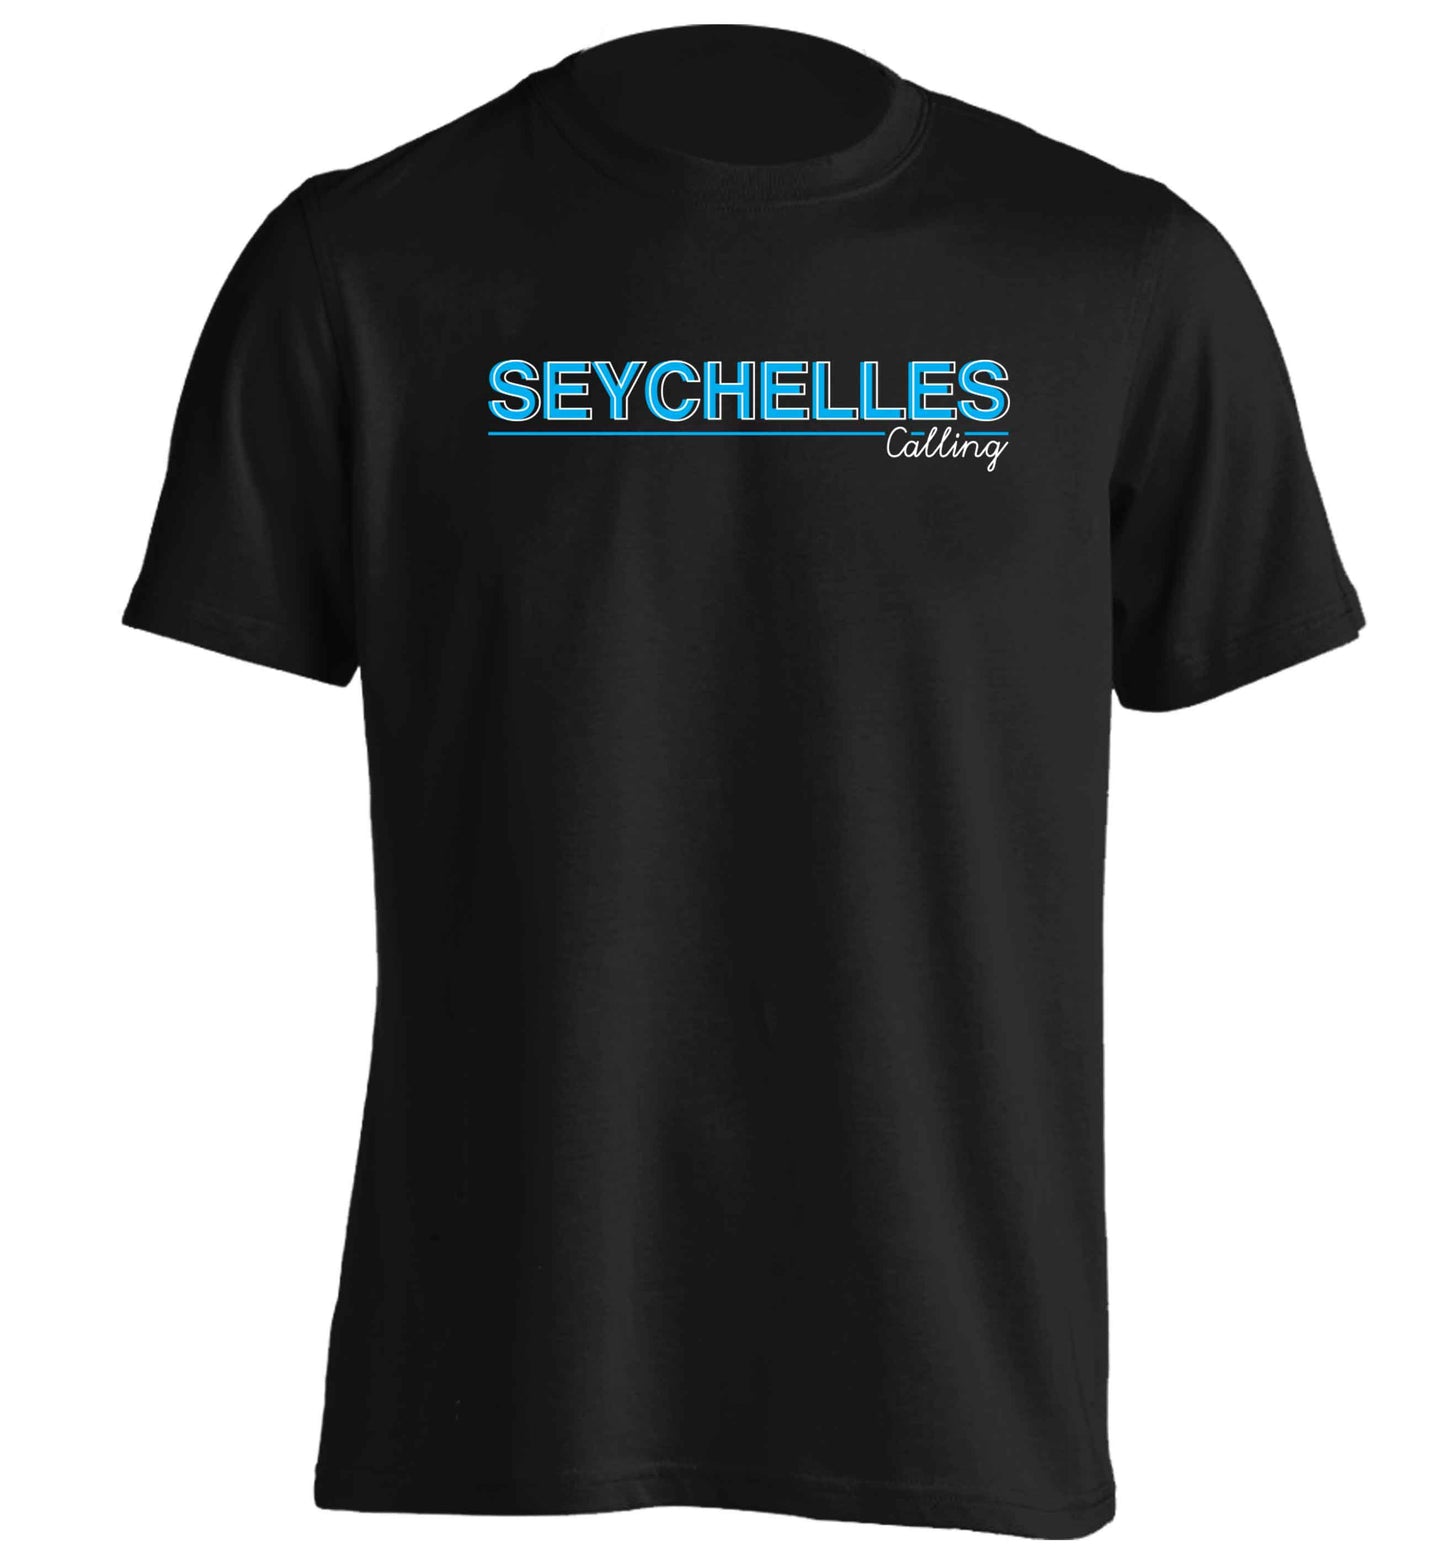 Seychelles calling adults unisex black Tshirt 2XL